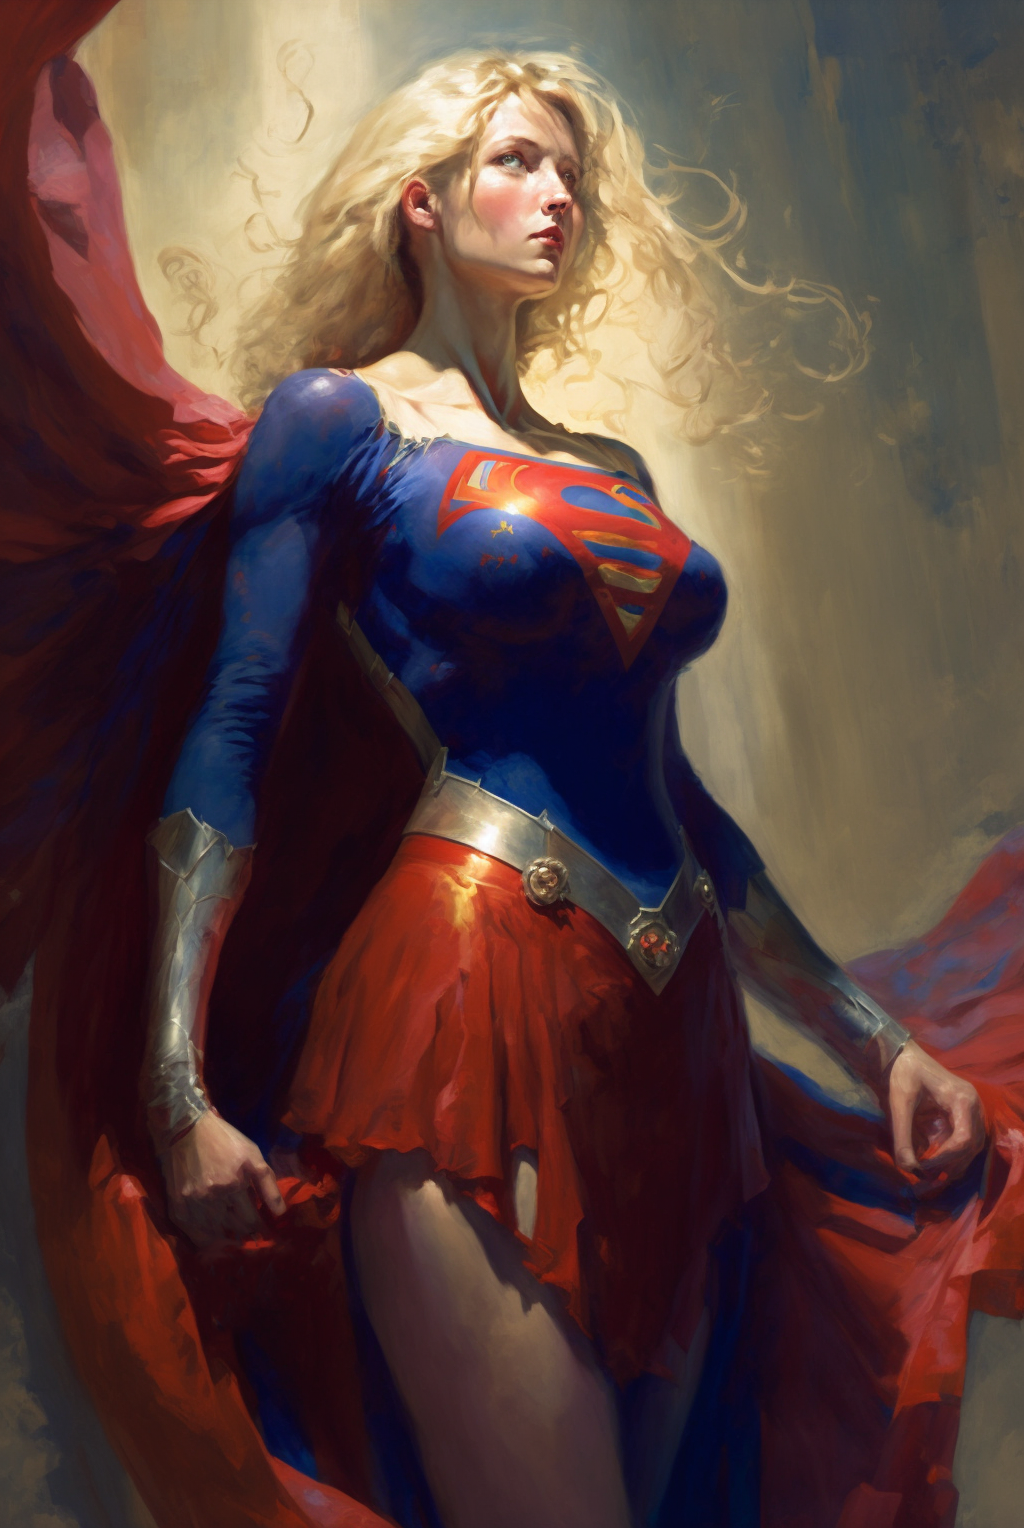 Anime Supergirl - 1 by ArgoCityArtworks on DeviantArt